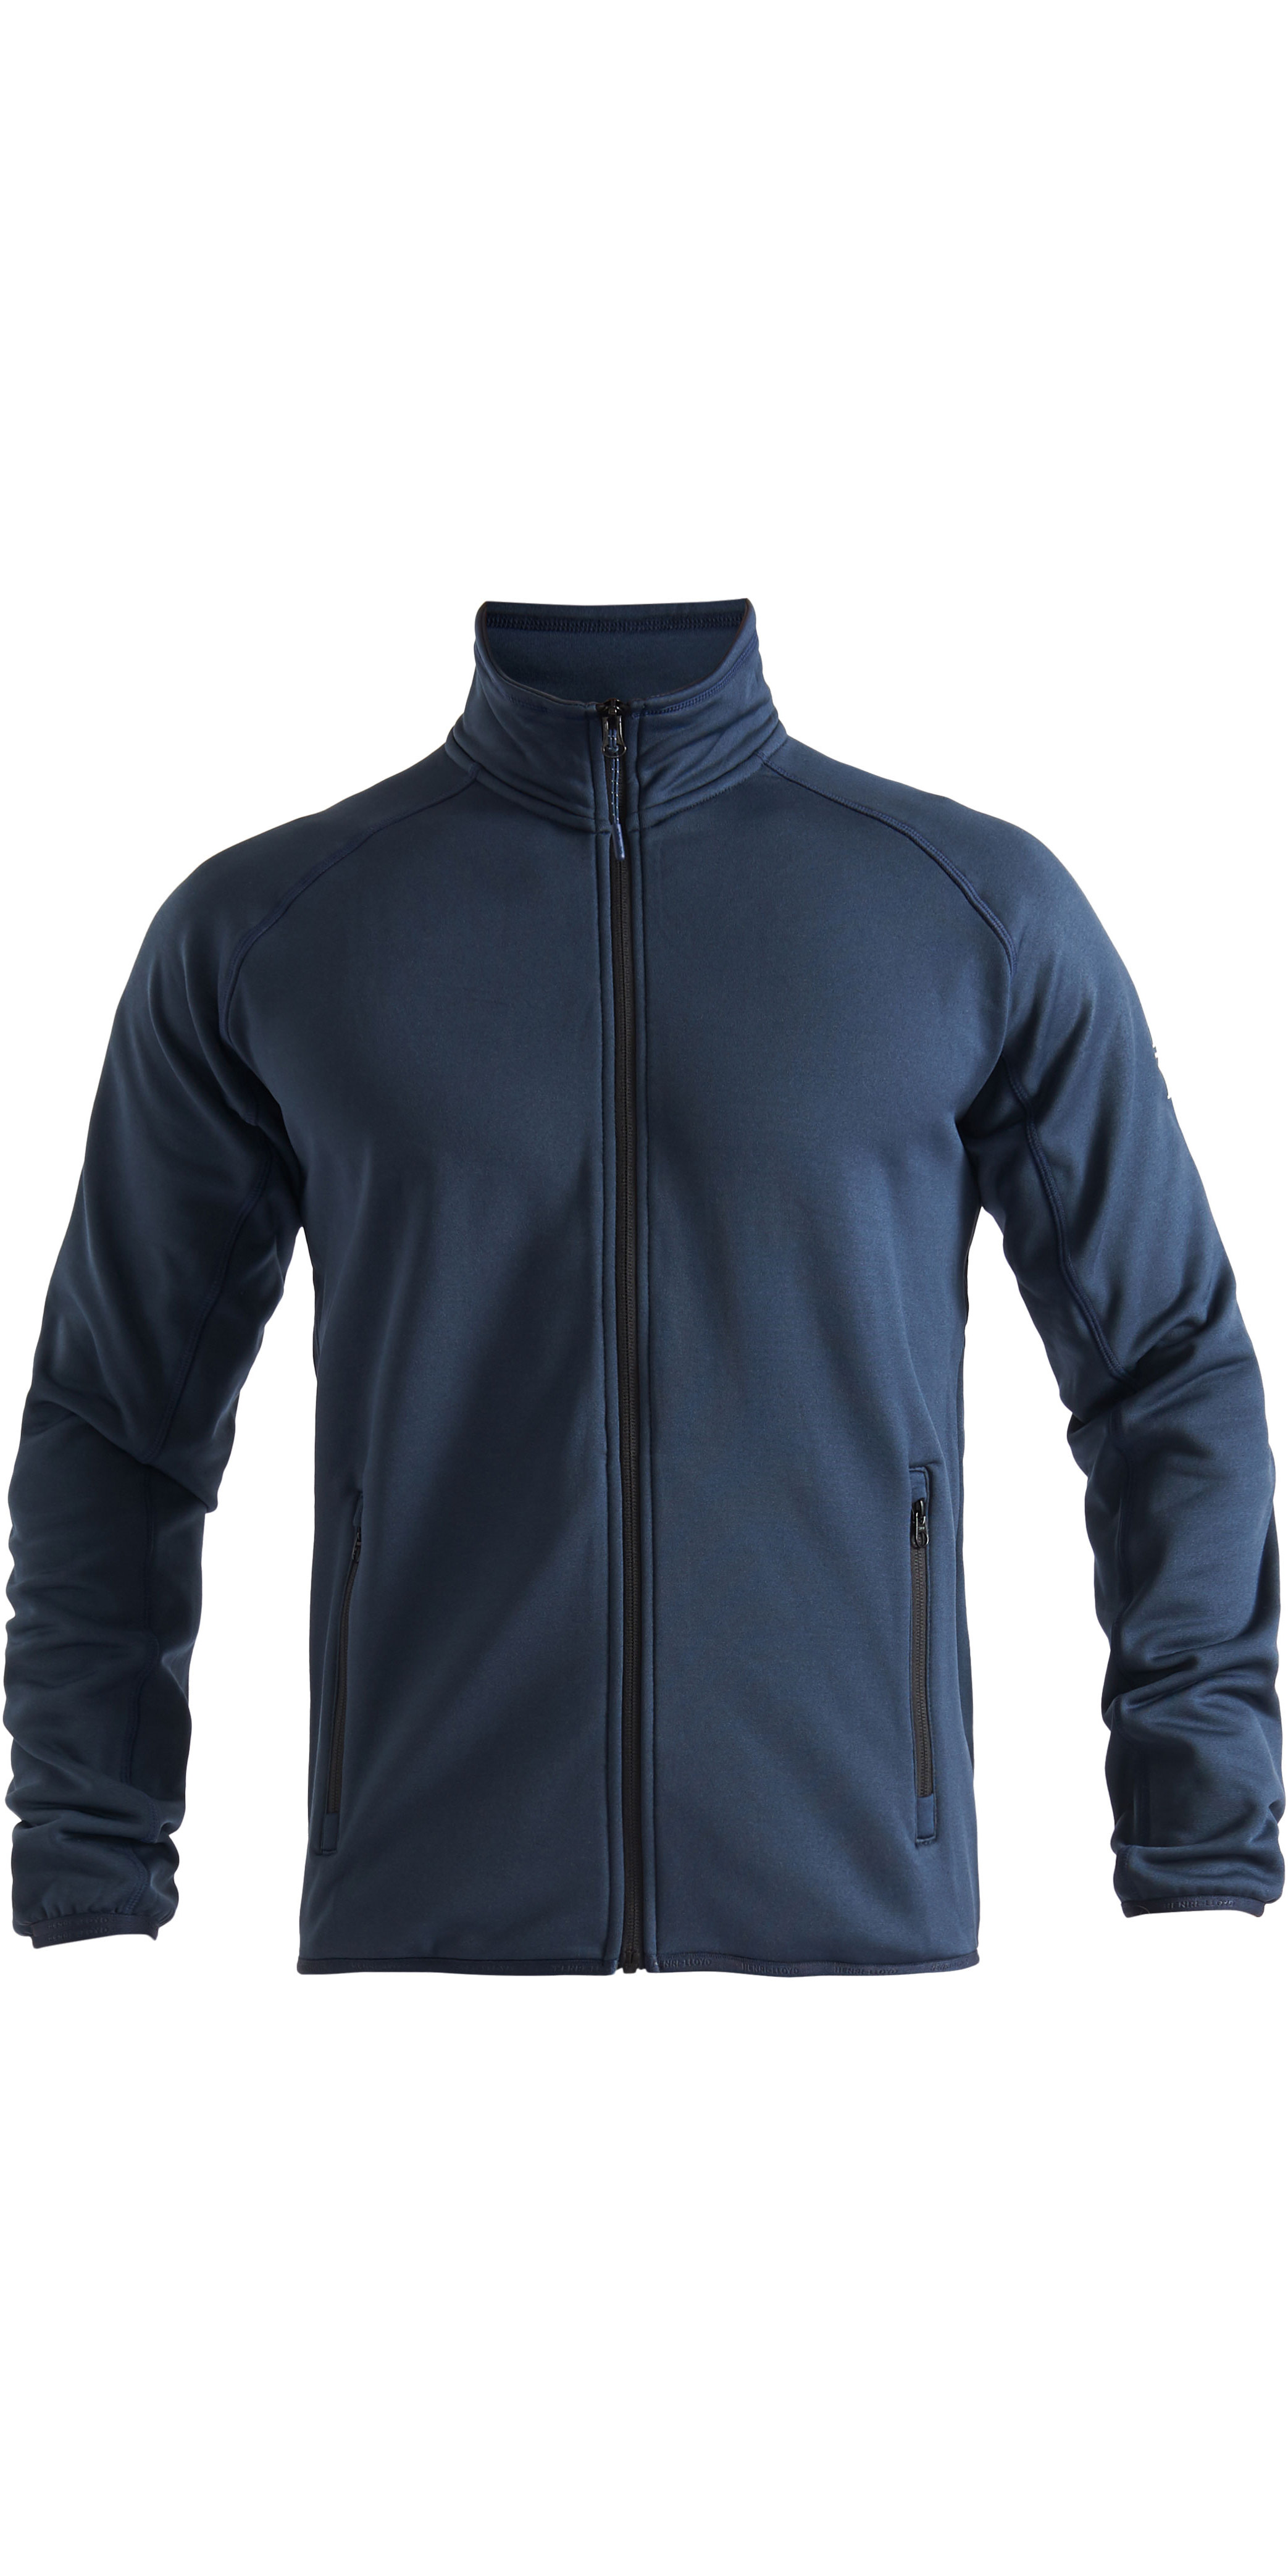 Zipped hand pockets Thermal Warm Heat Layer Layers Henri Lloyd Mens Maverick Mid Warm Fleece Coat Jacket Navy 